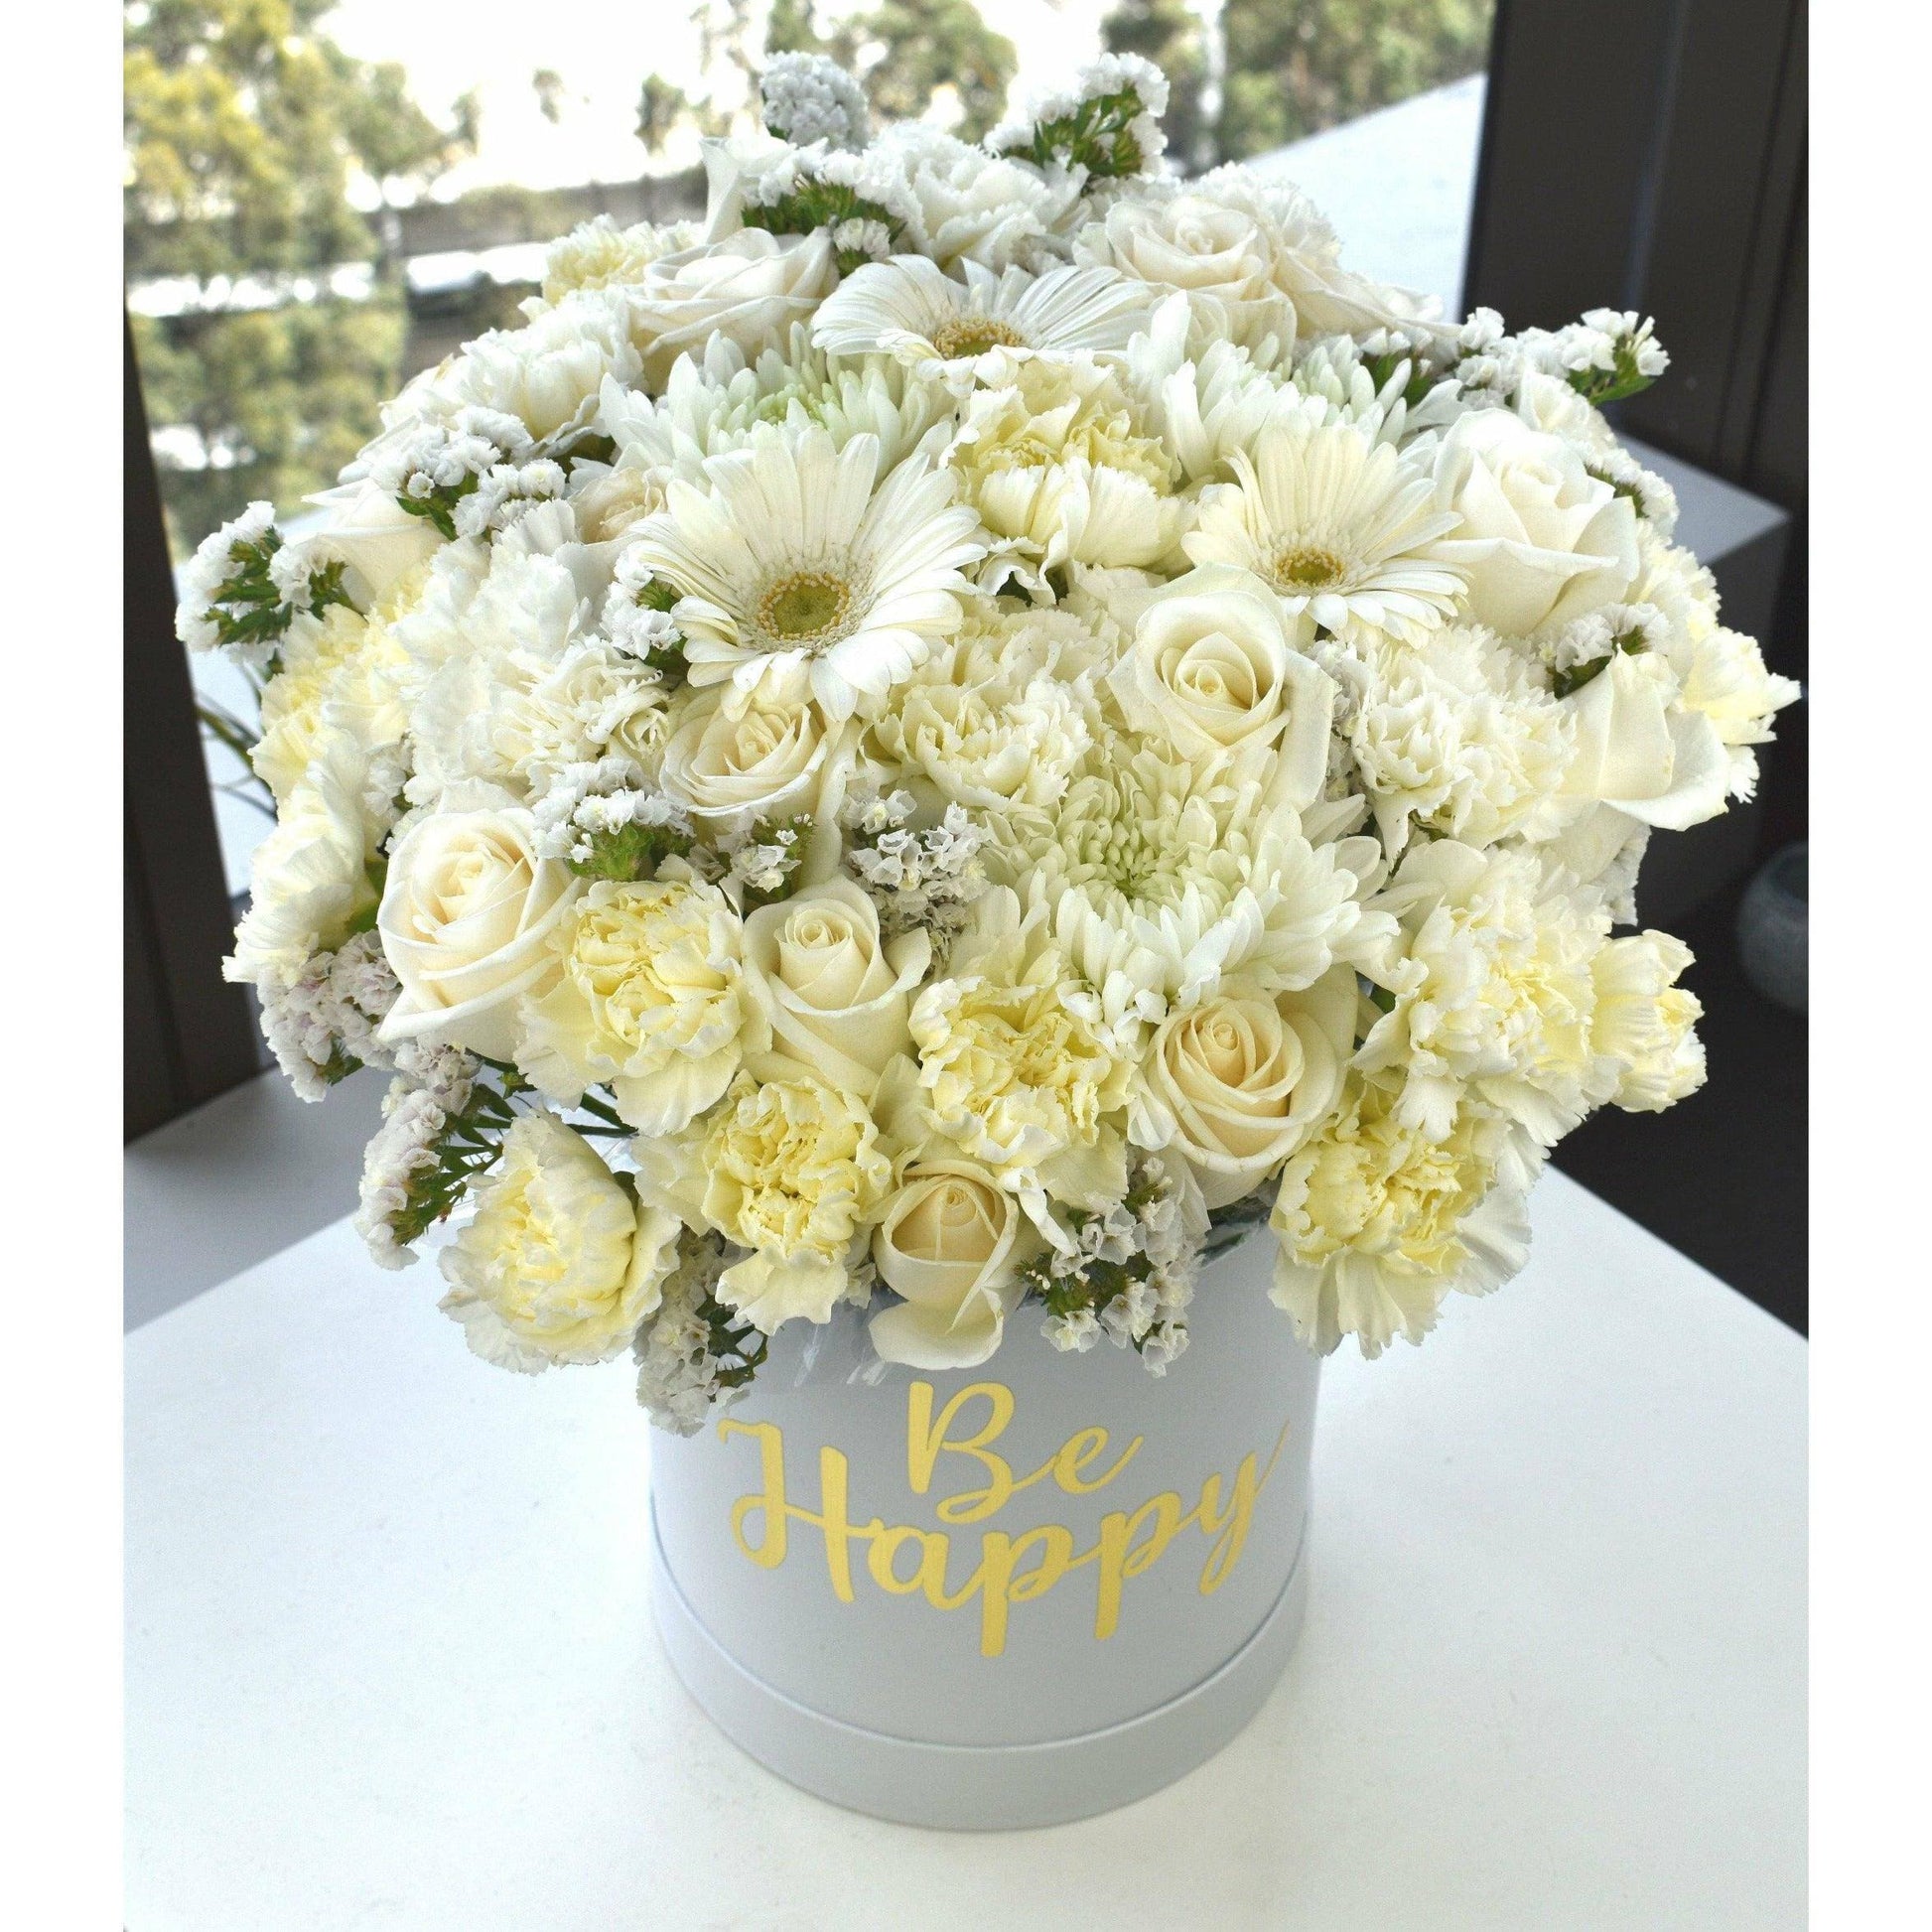 White Blooms - Officeflower